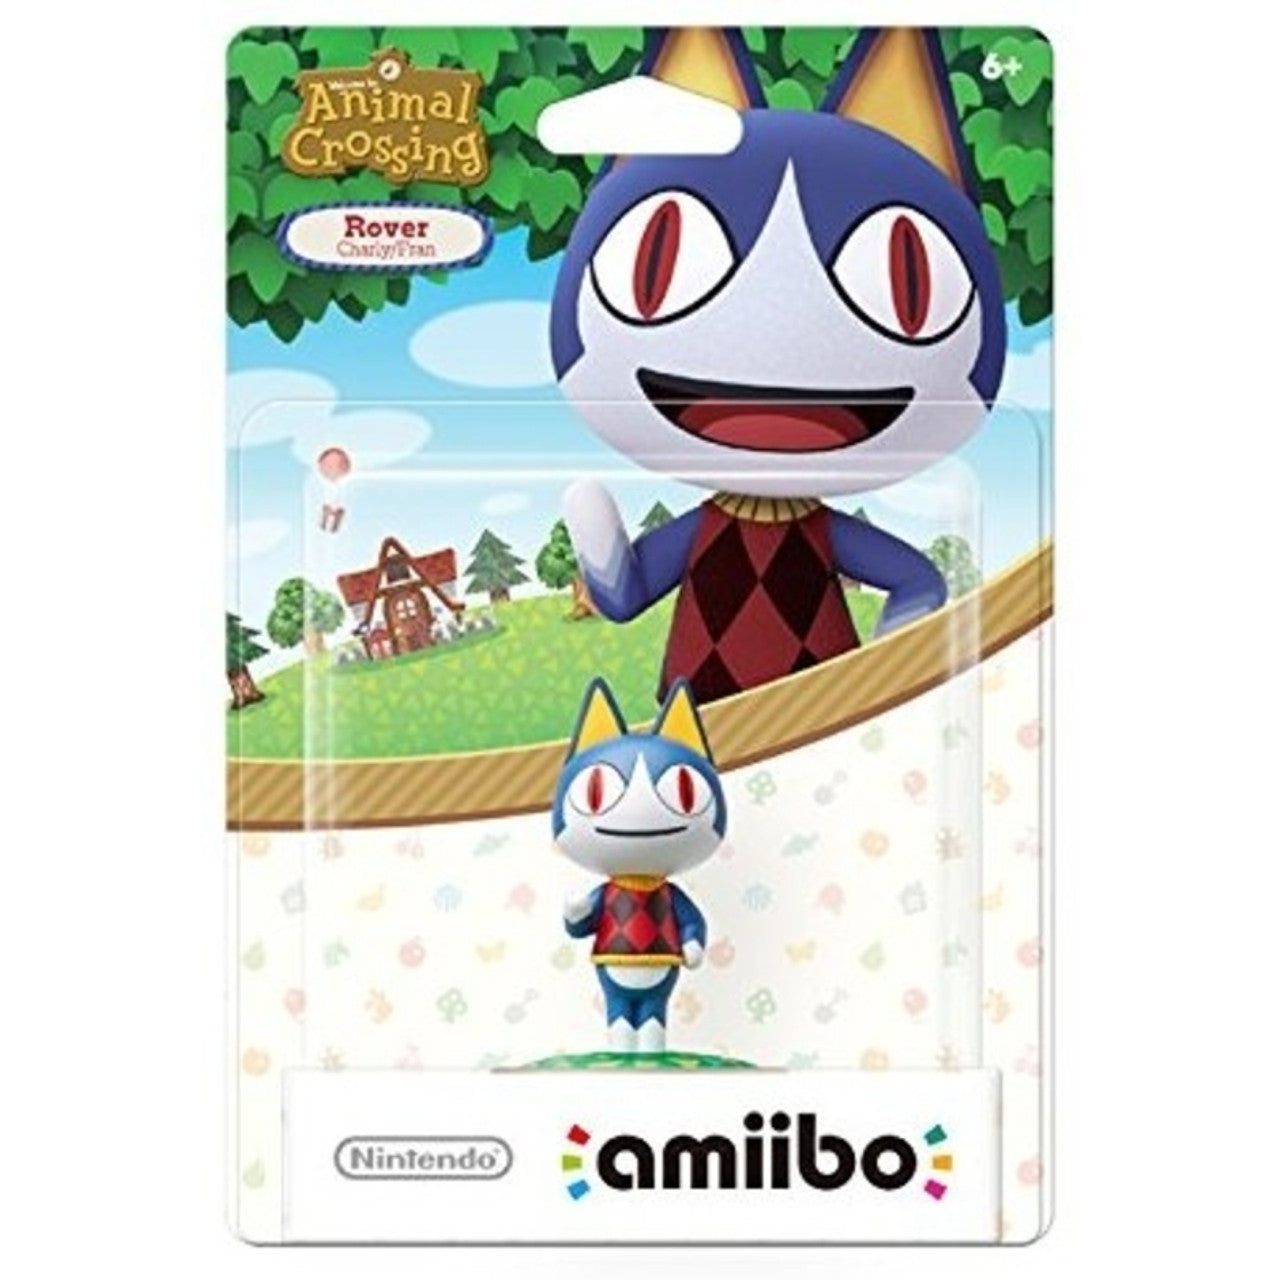 Nintendo - amiibo Animal Crossing Series Rover